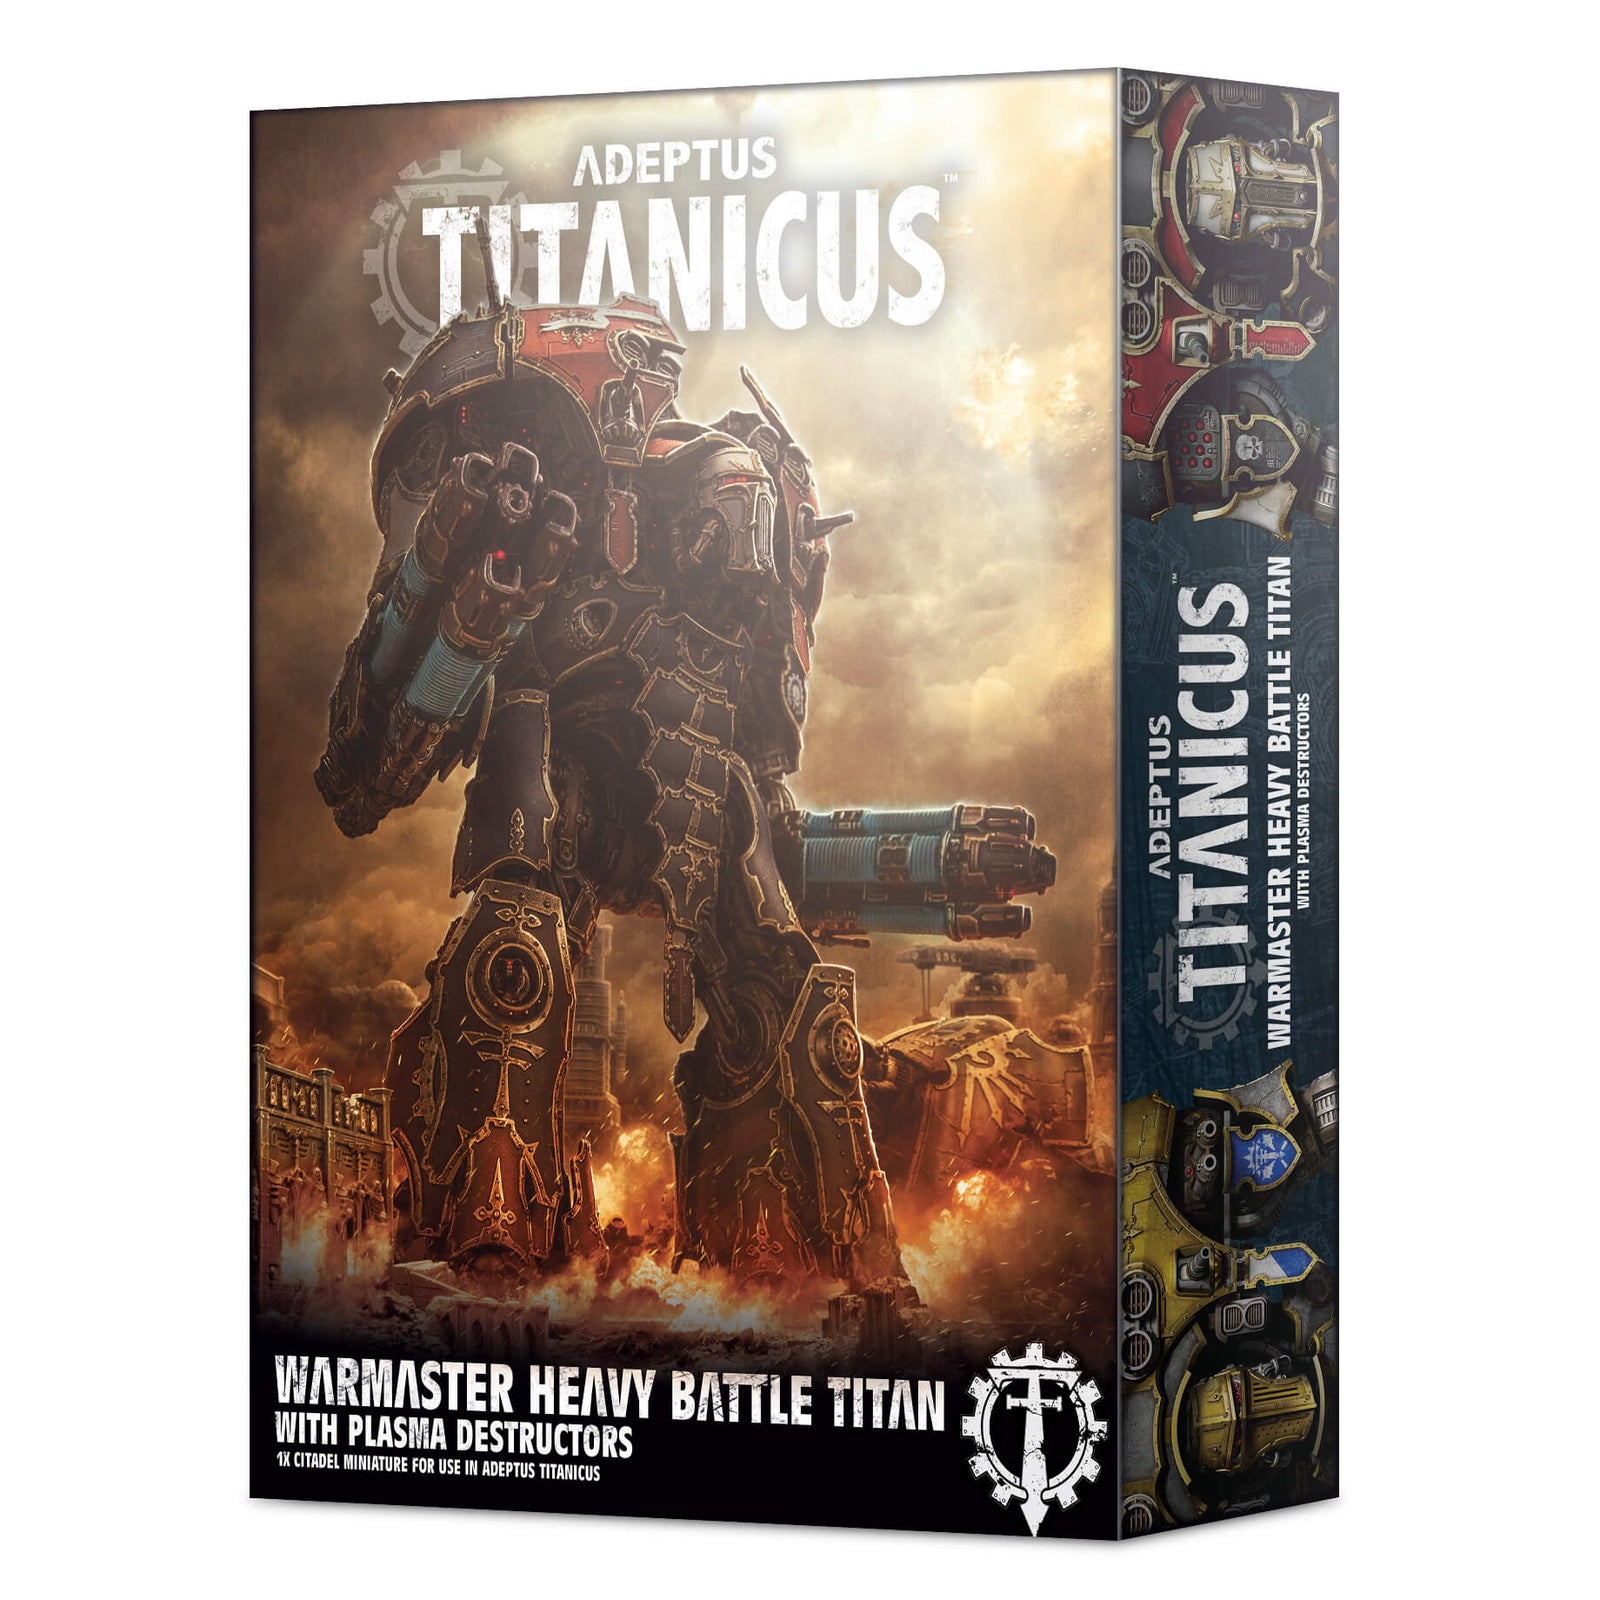 Packaging image for Warmaster heavy Battle Titan